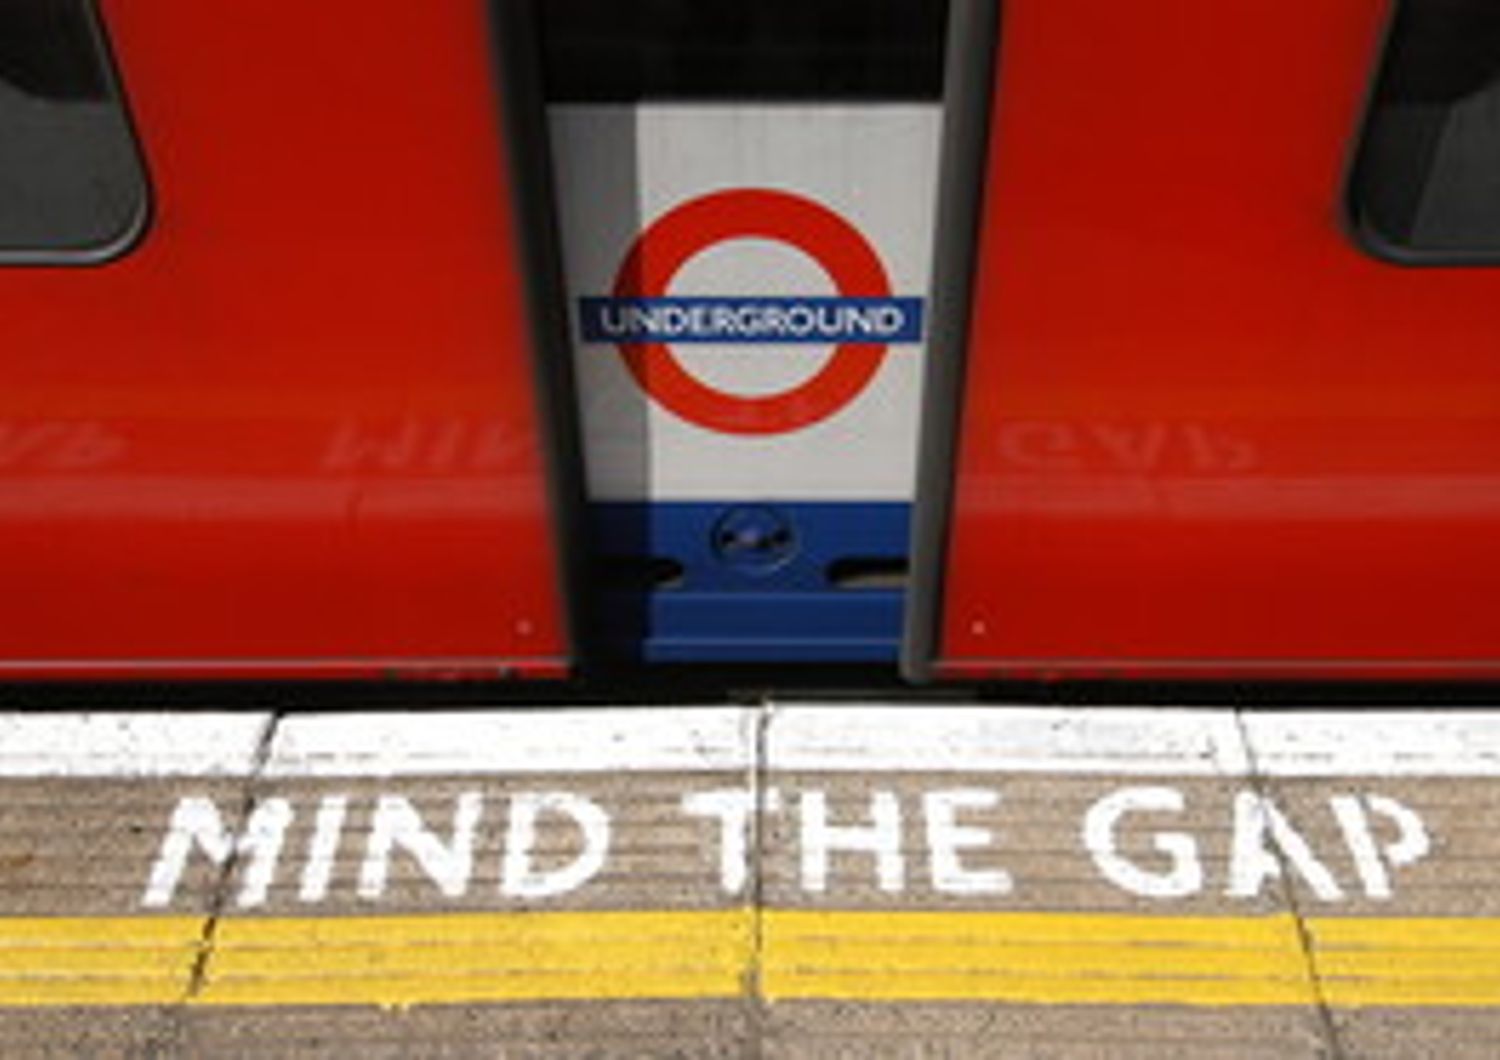 &nbsp;Metropolitana Londra mind the gap